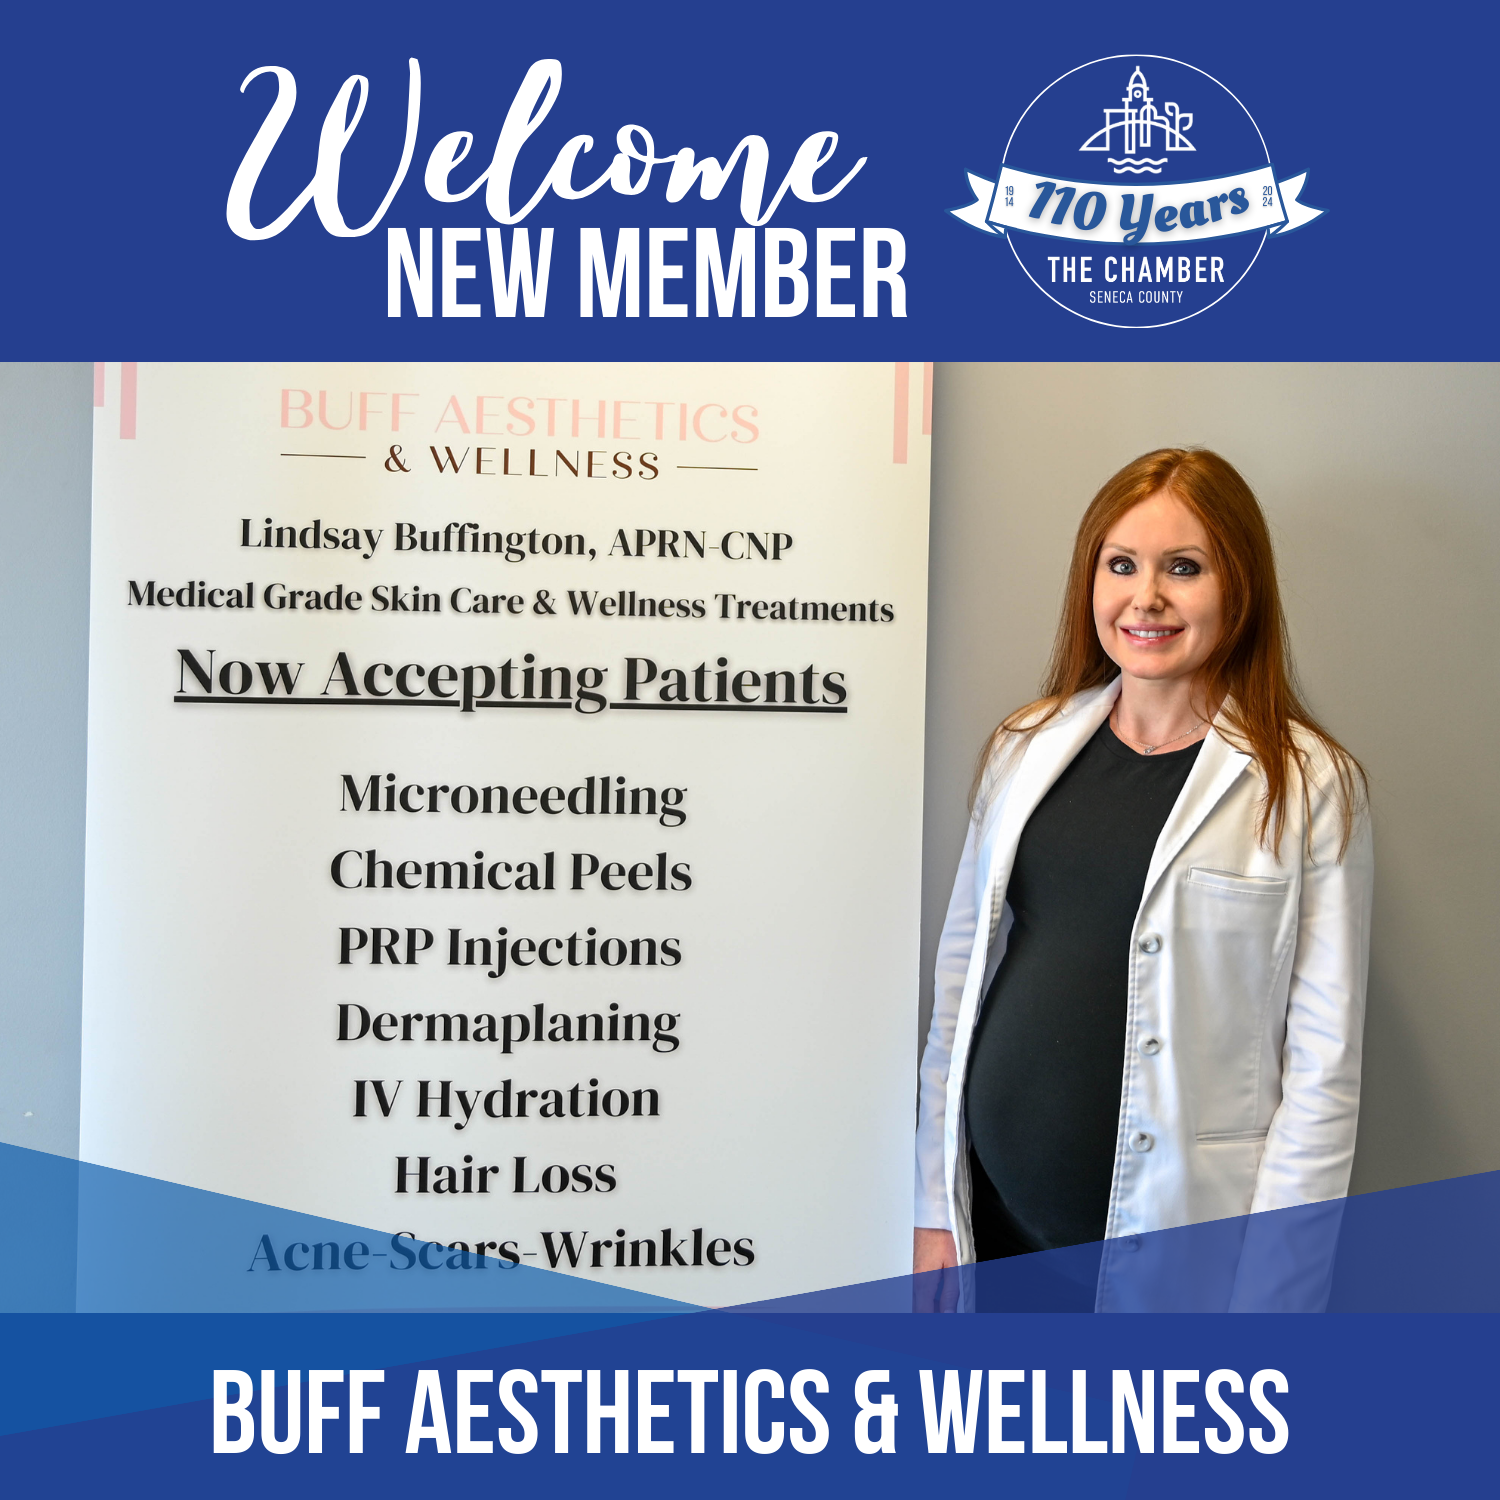 New Member: Buff Aesthetics & Wellness